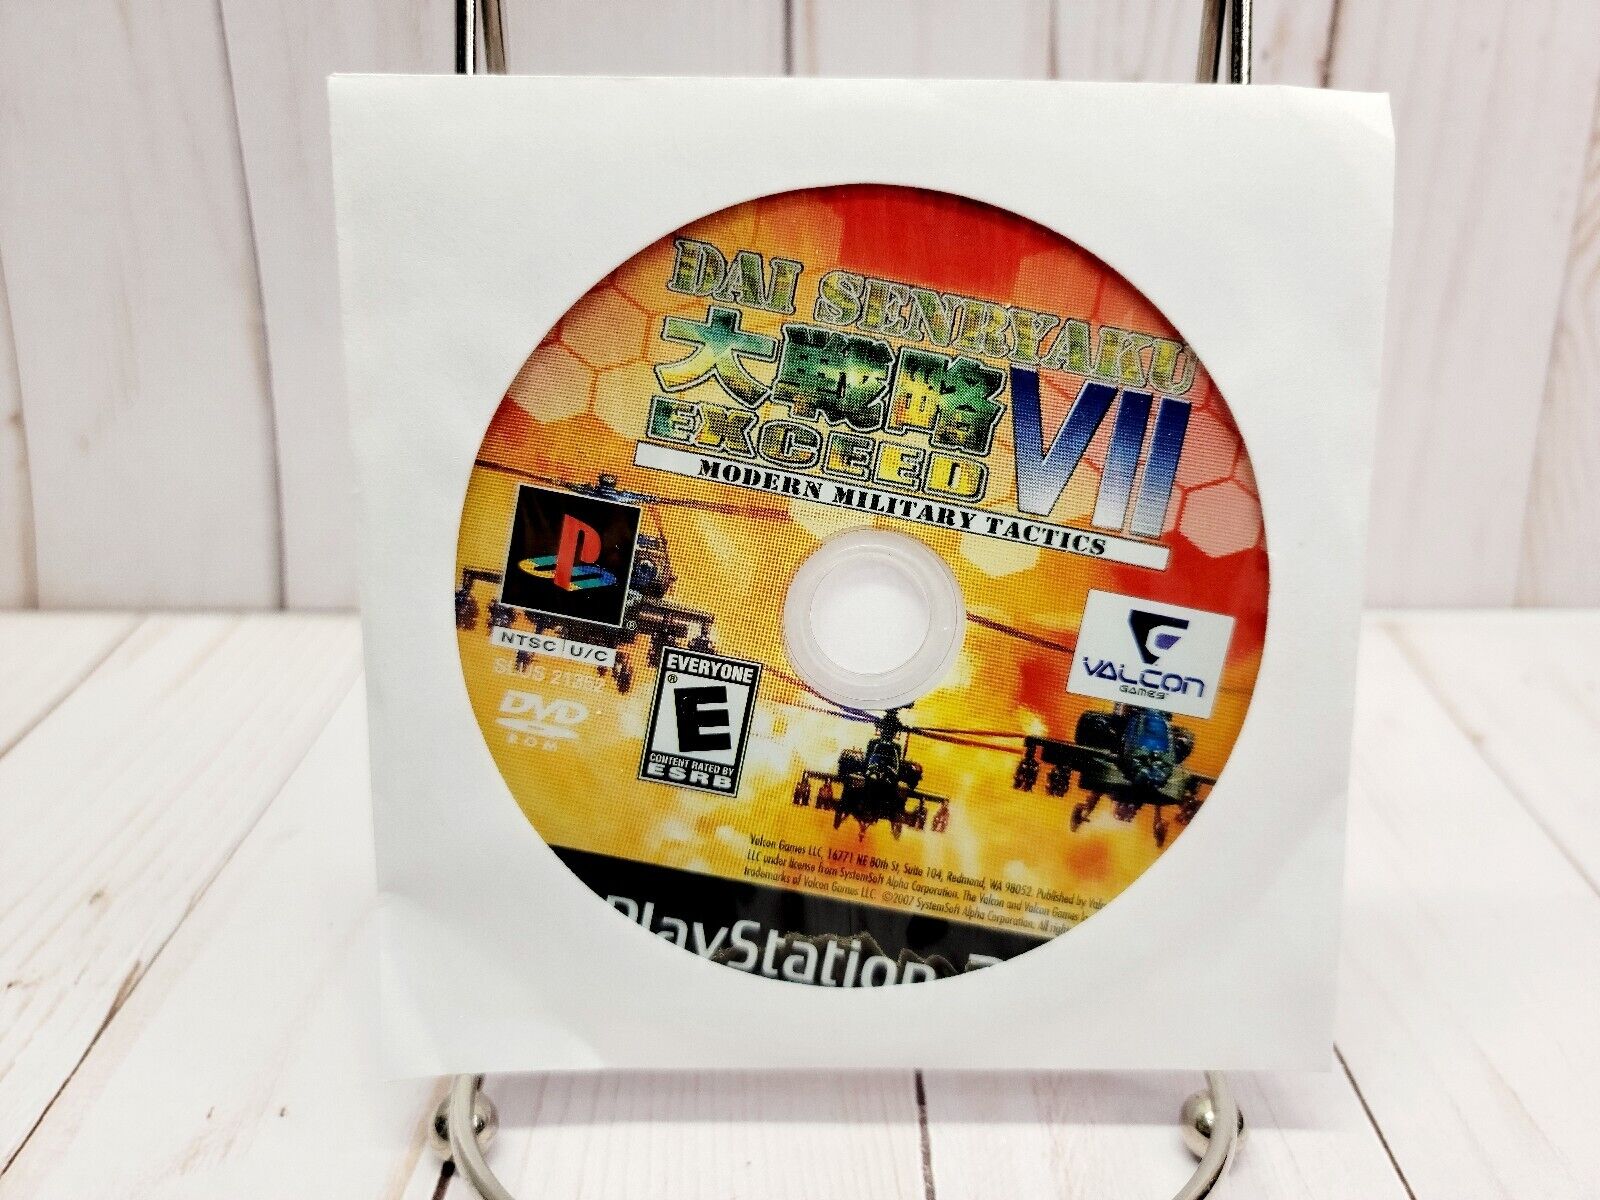 Dai Senryaku: Exceed VII- Modern Military Tactics Sony PlayStation 2 -PS2 Tested